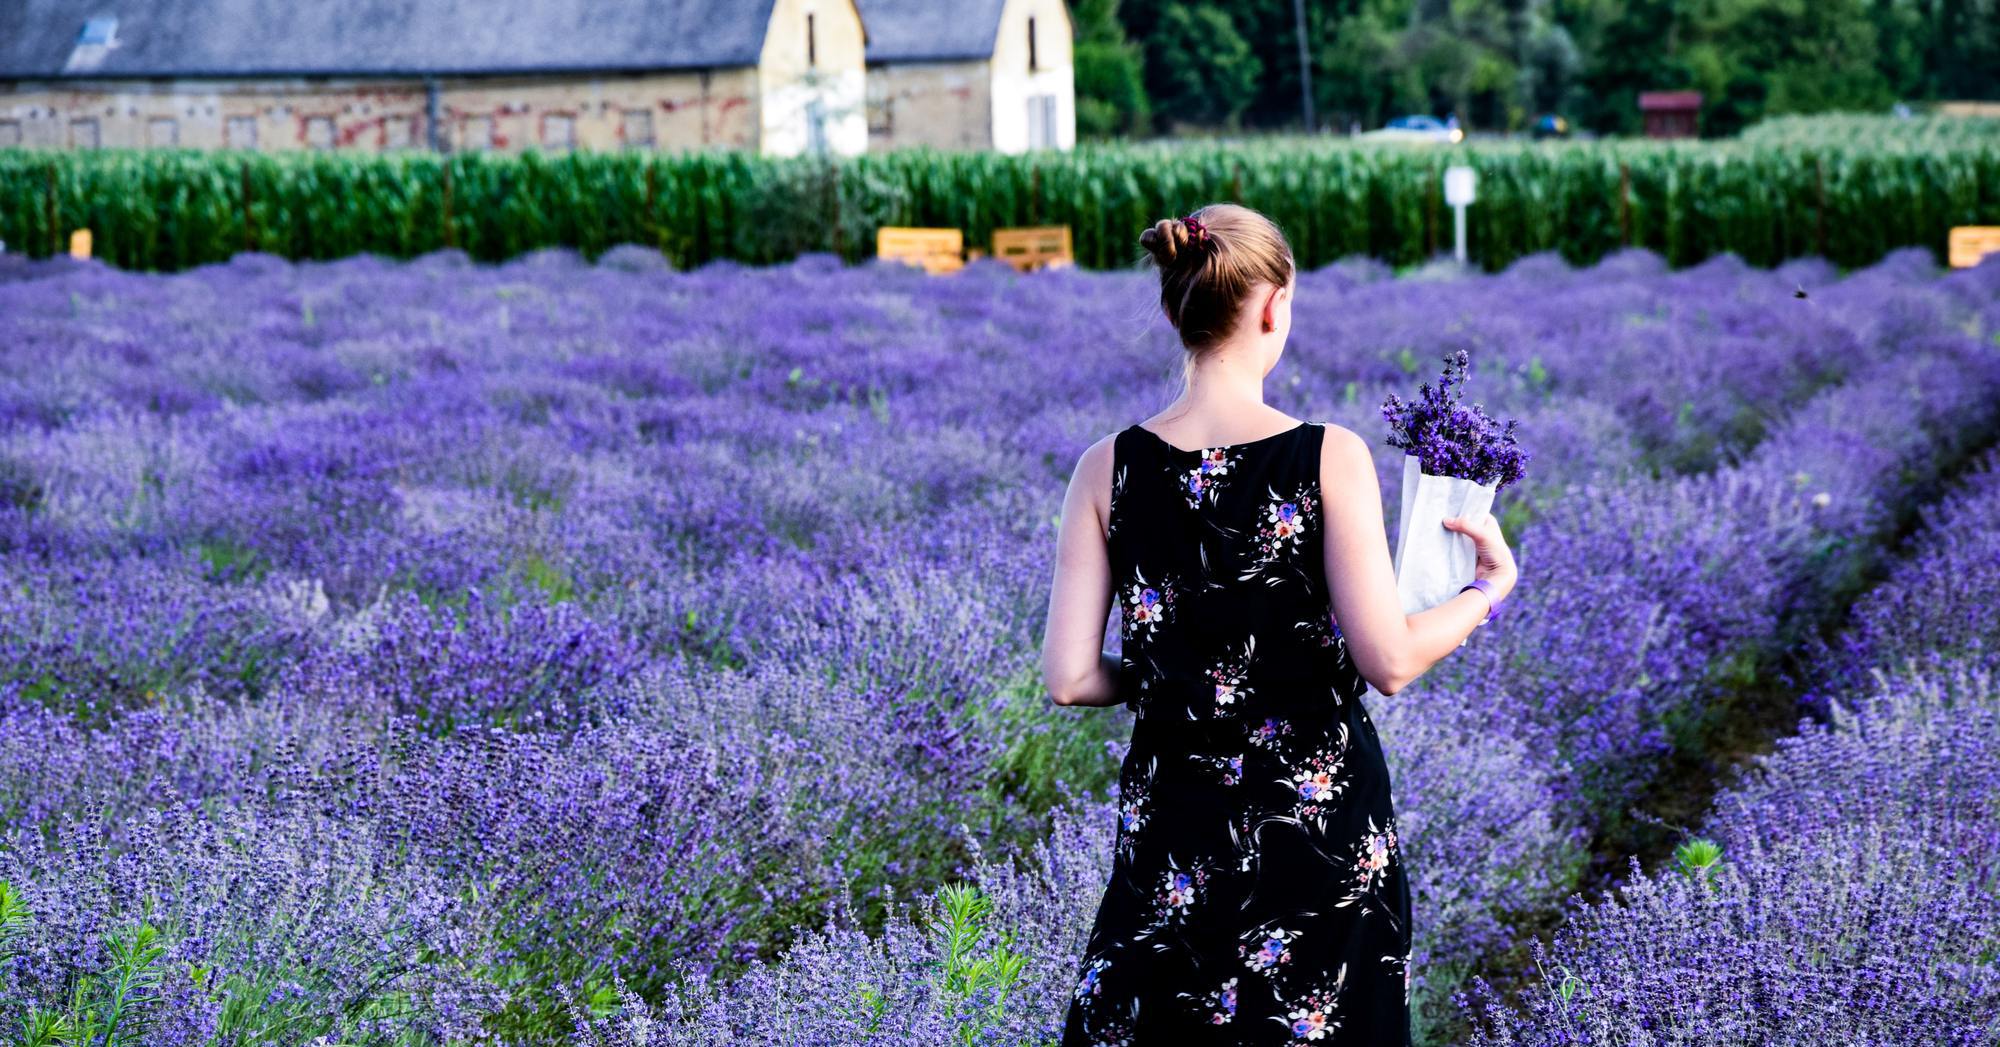 Why choose lavender essential oil?